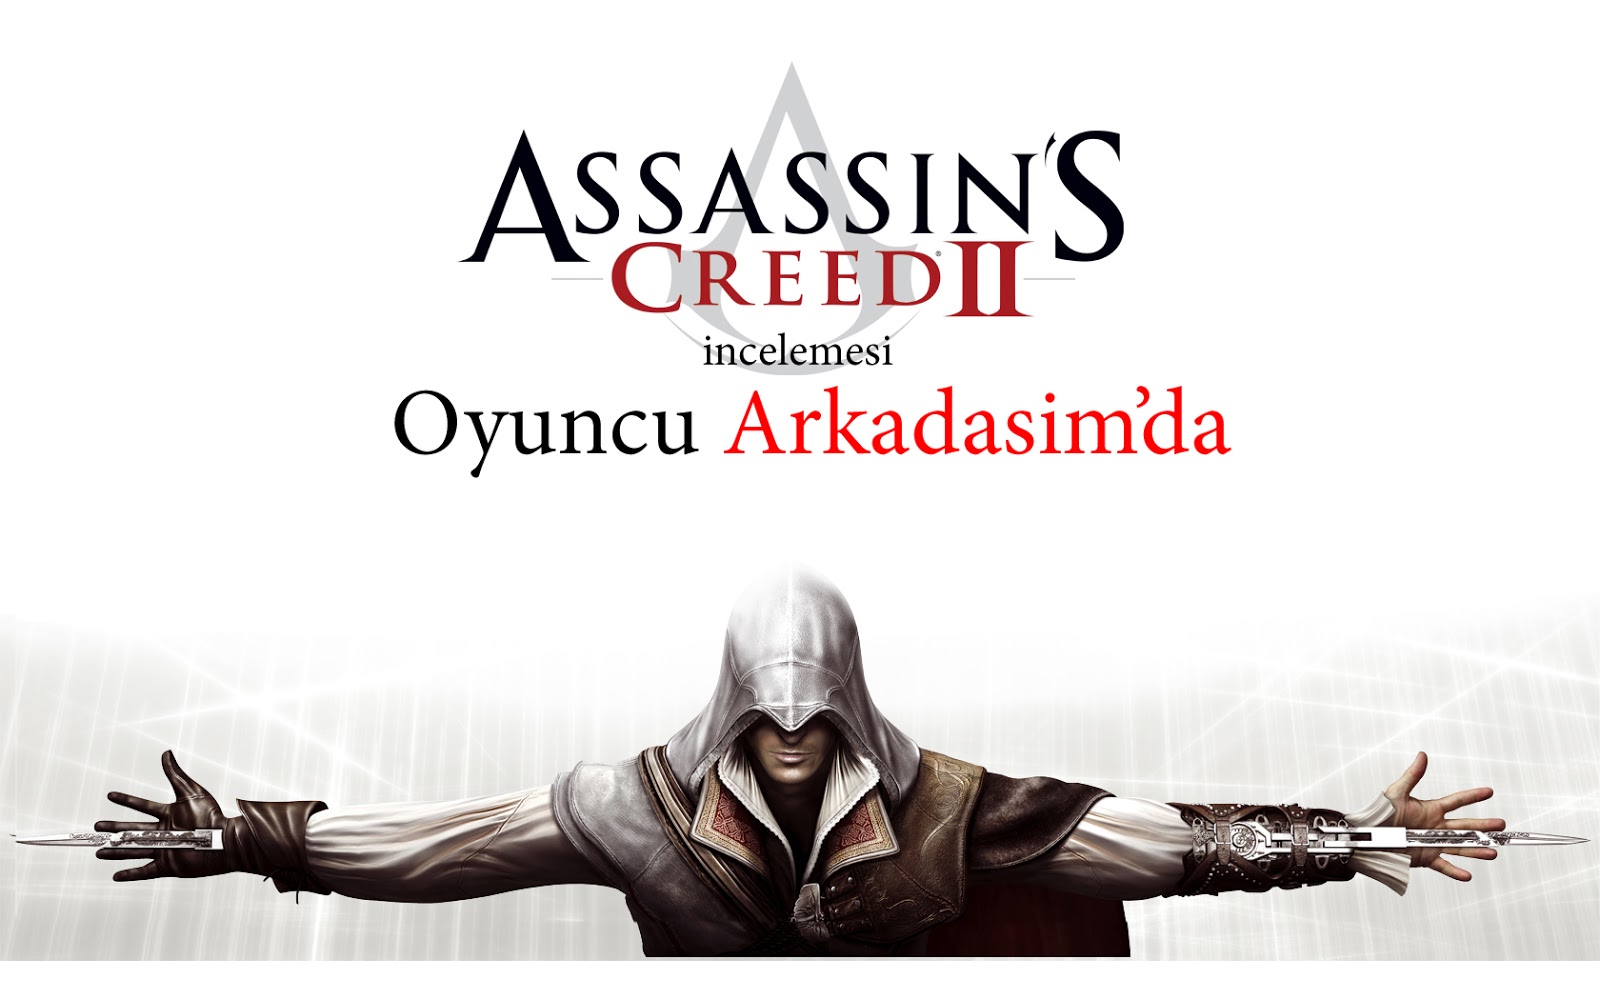 Assassins Creed 2 статуэтки. Ассасин Крид 2 плакат розыска. Исторические личности в Assassins Creed. Assassins Creed II управление.